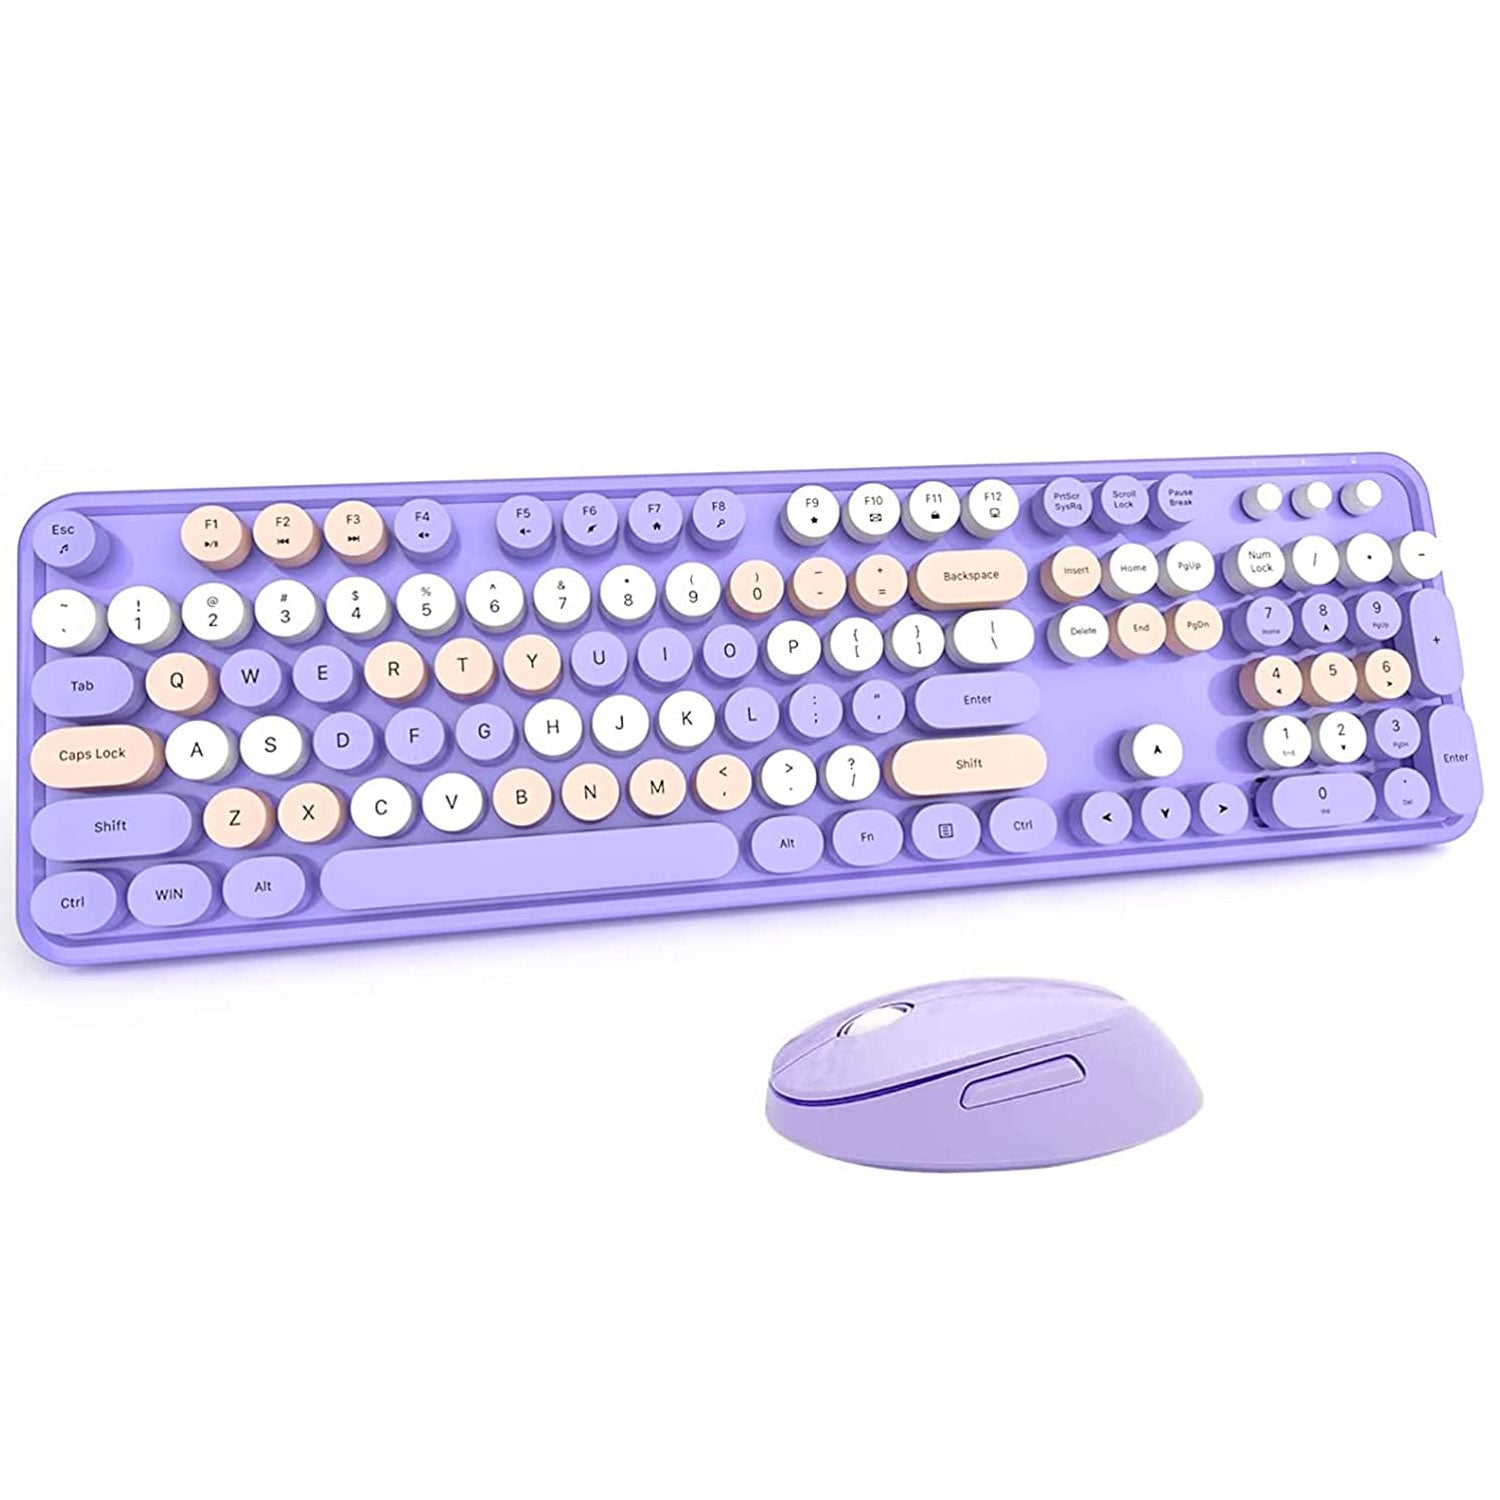 Mofii Wireless Keyboard and Mouse Combo Purple